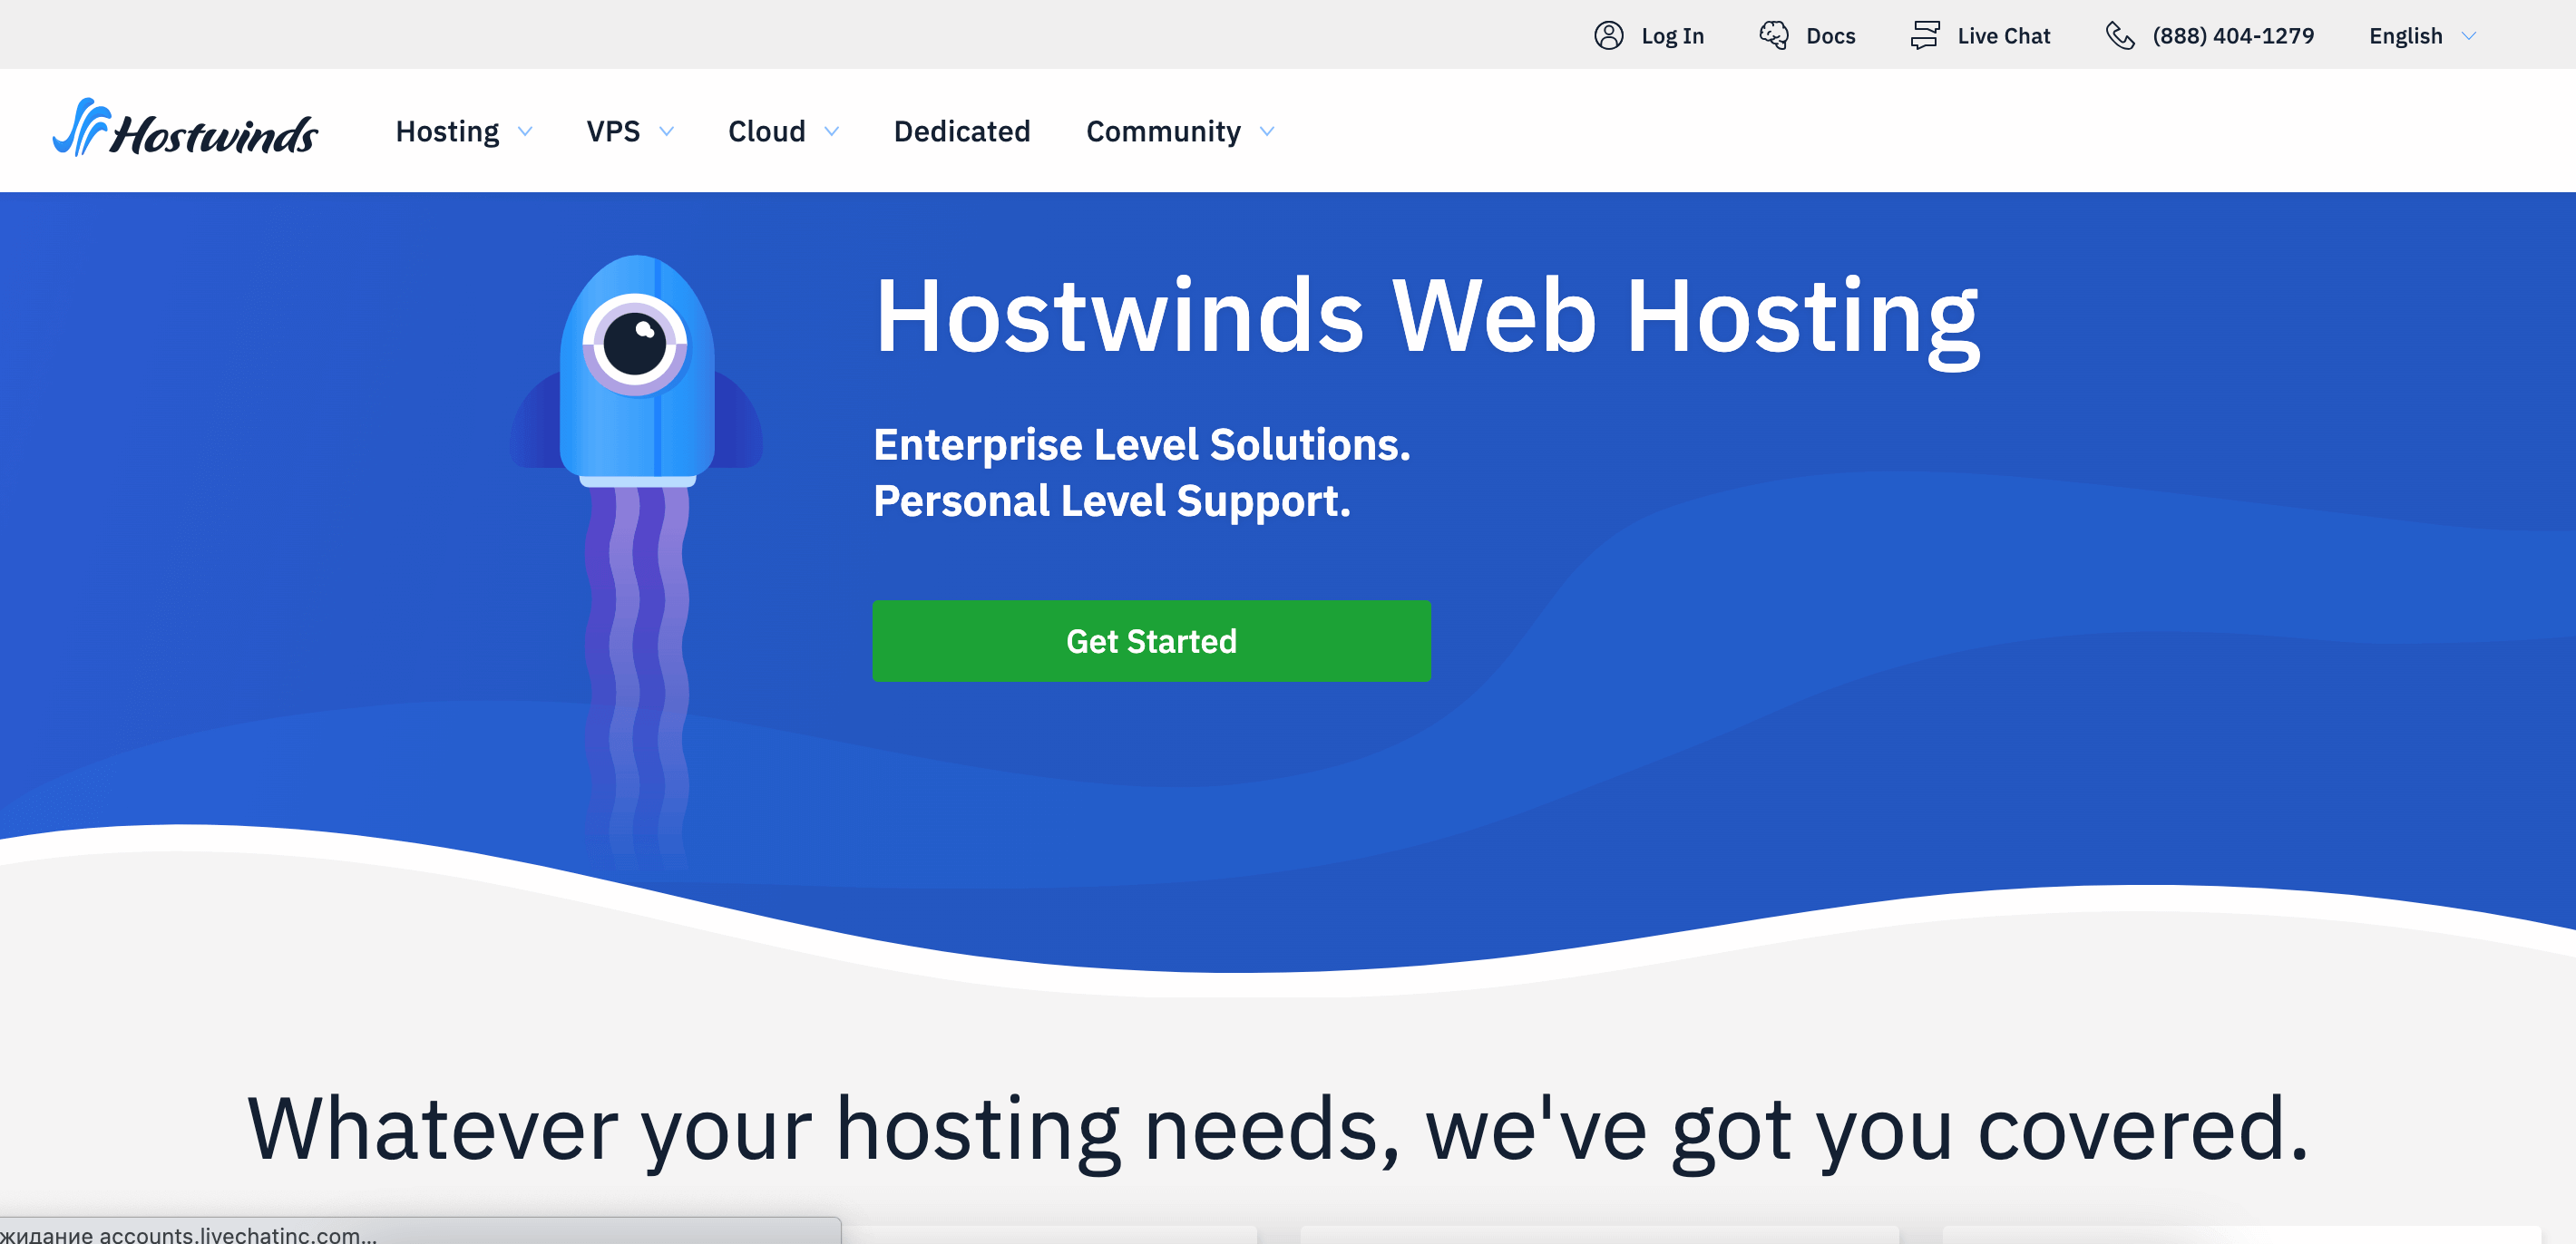 Top Cloud Hosting Service Providers